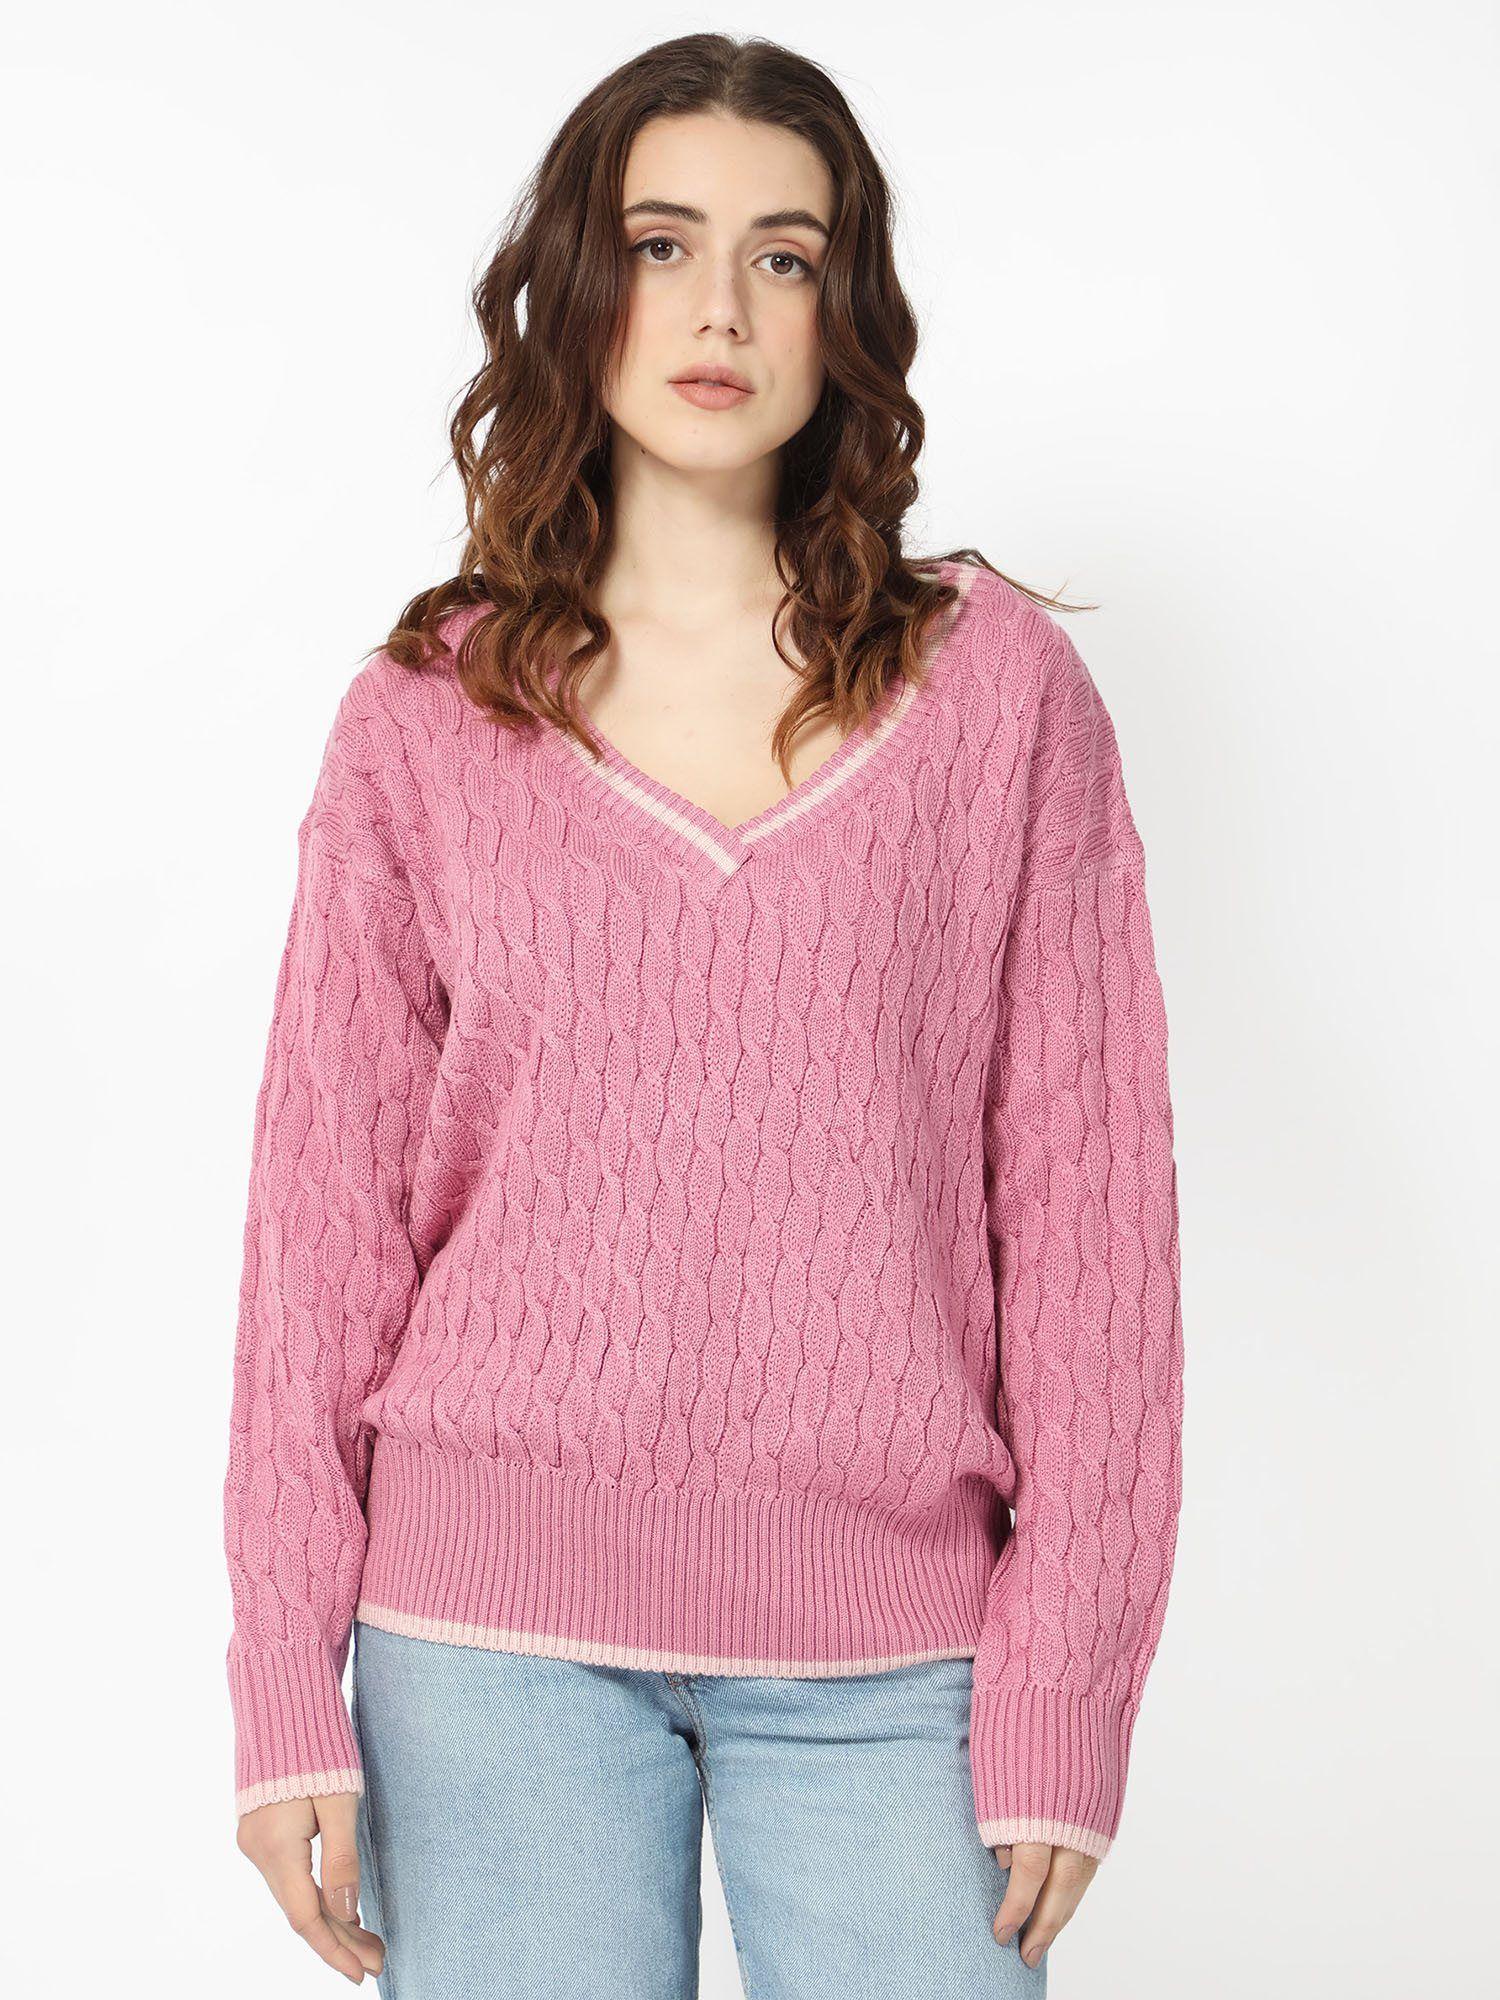 broun dusky pink knitted sweater